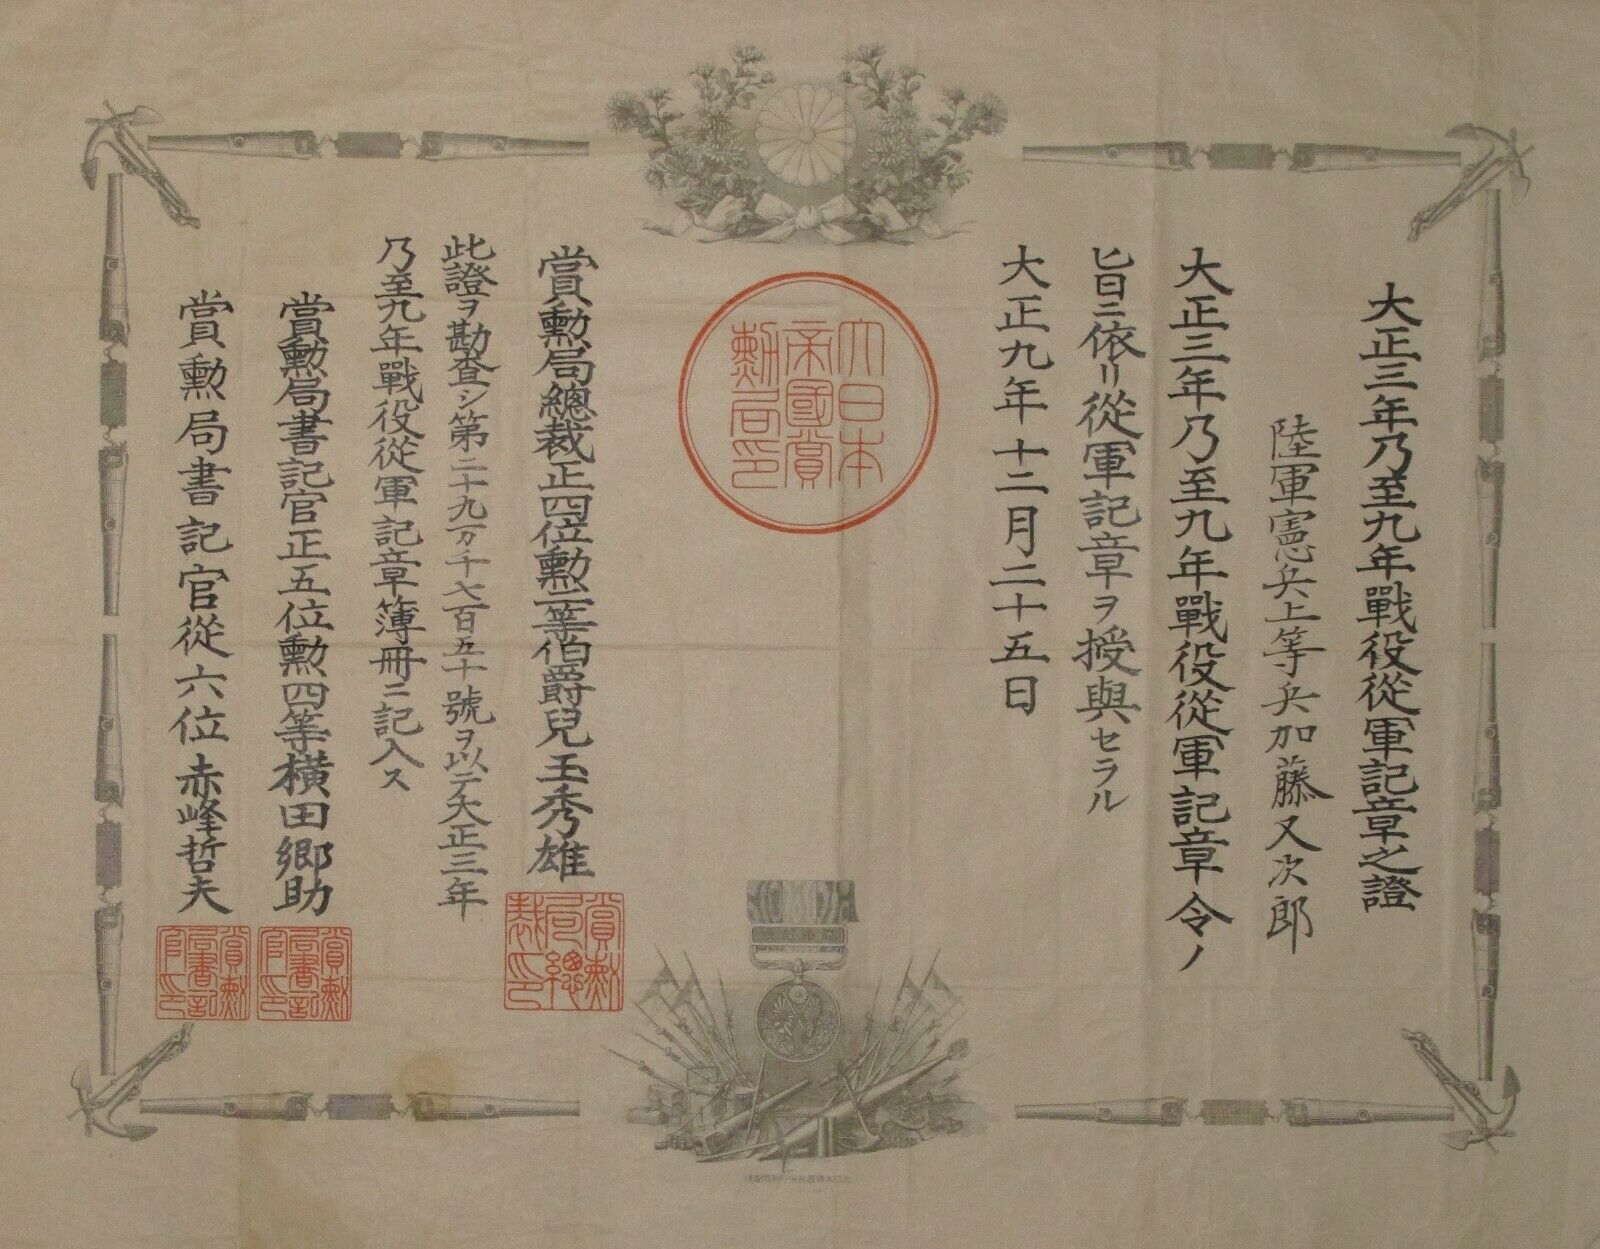 Kenpeitai Award  Document.jpg